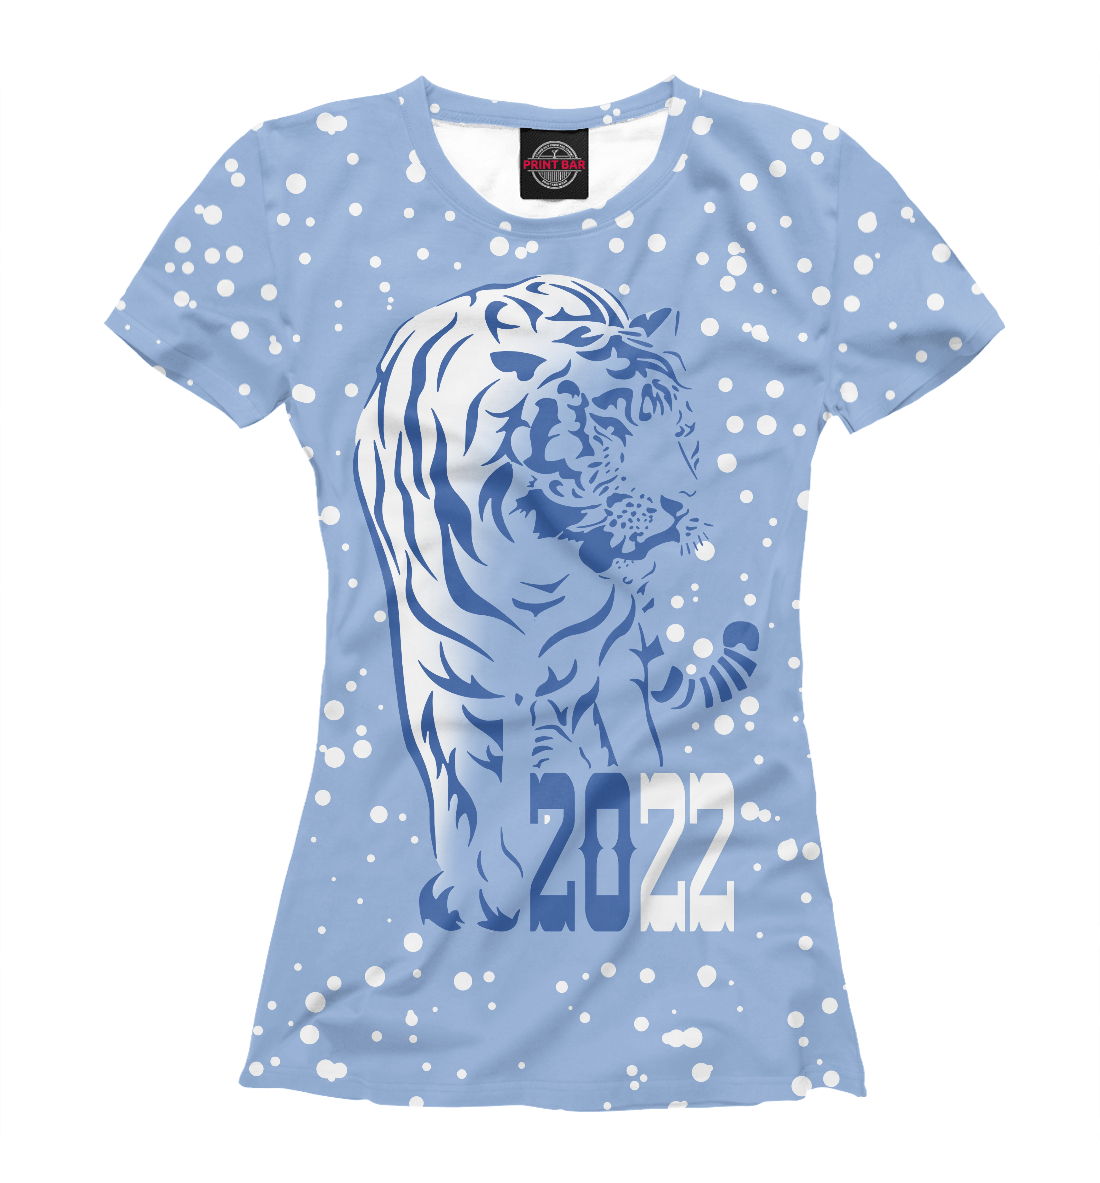 Футболка Голубой водяной тигр для женщин, артикул: NVR-742883-fut-1mp